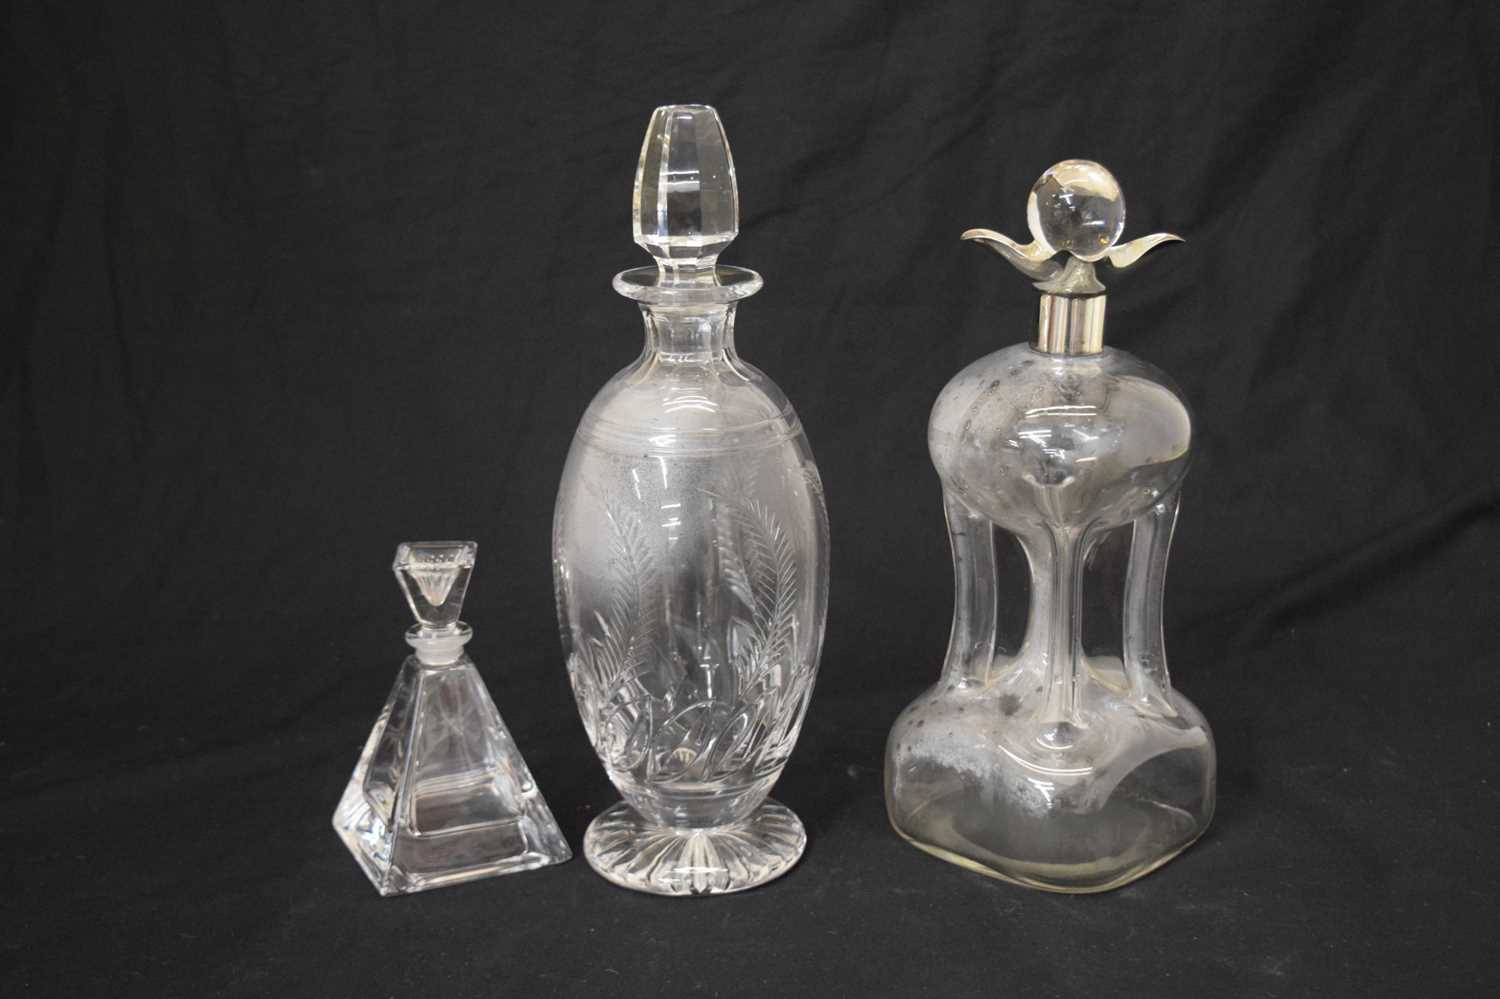 Edward VII silver mounted glug glug decanter, a Stuart crystal decanter, and a nightcap decanter - Image 8 of 8